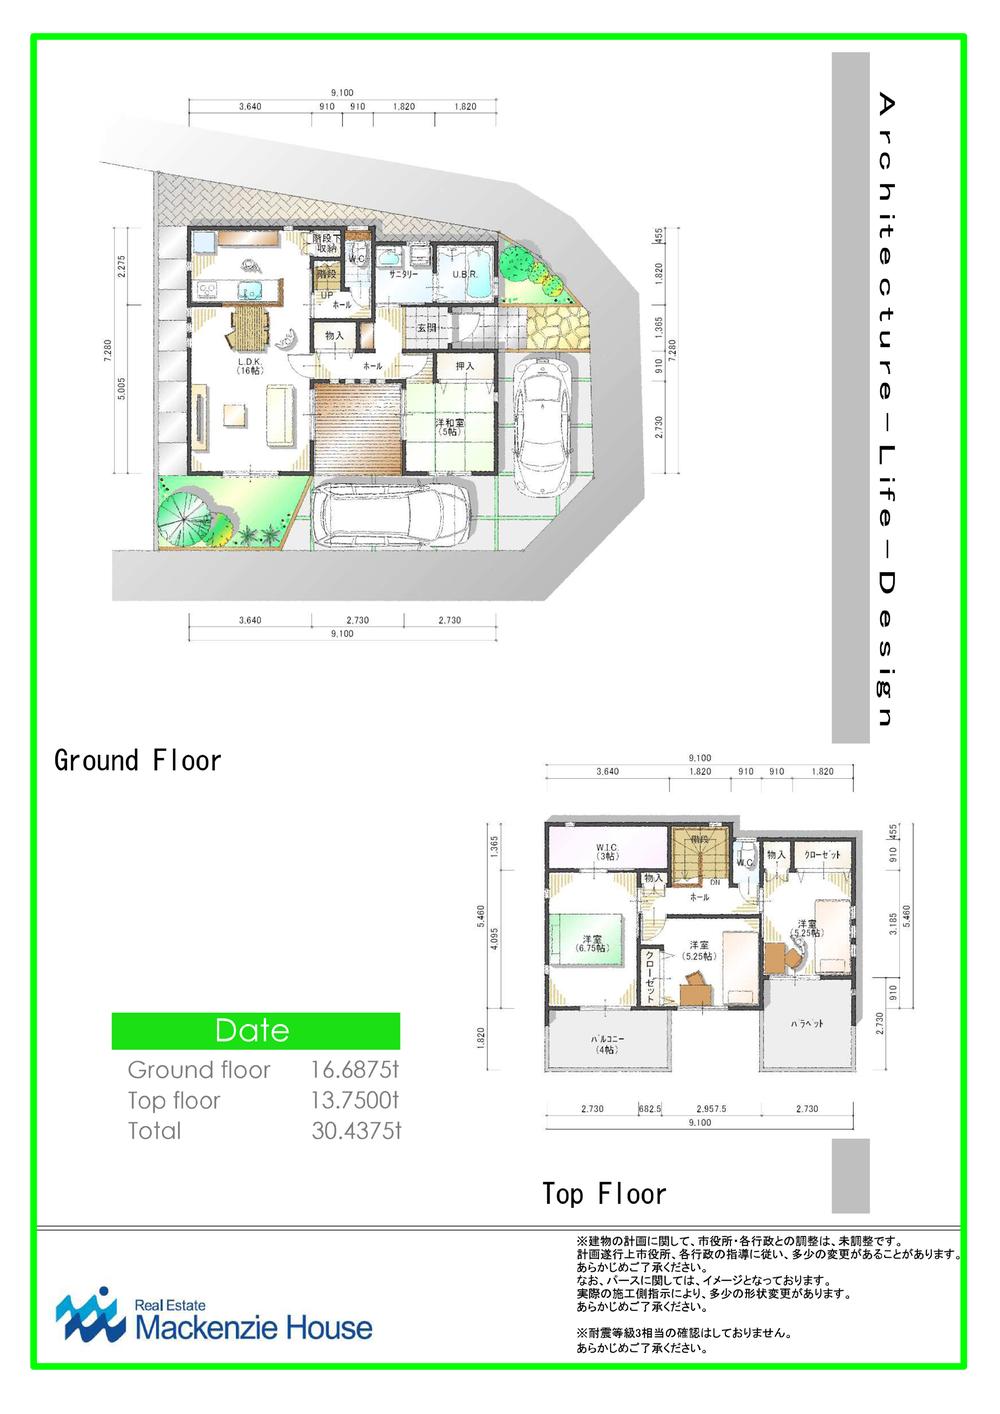 Other building plan example. Building plan example (No.2._ floor plan)